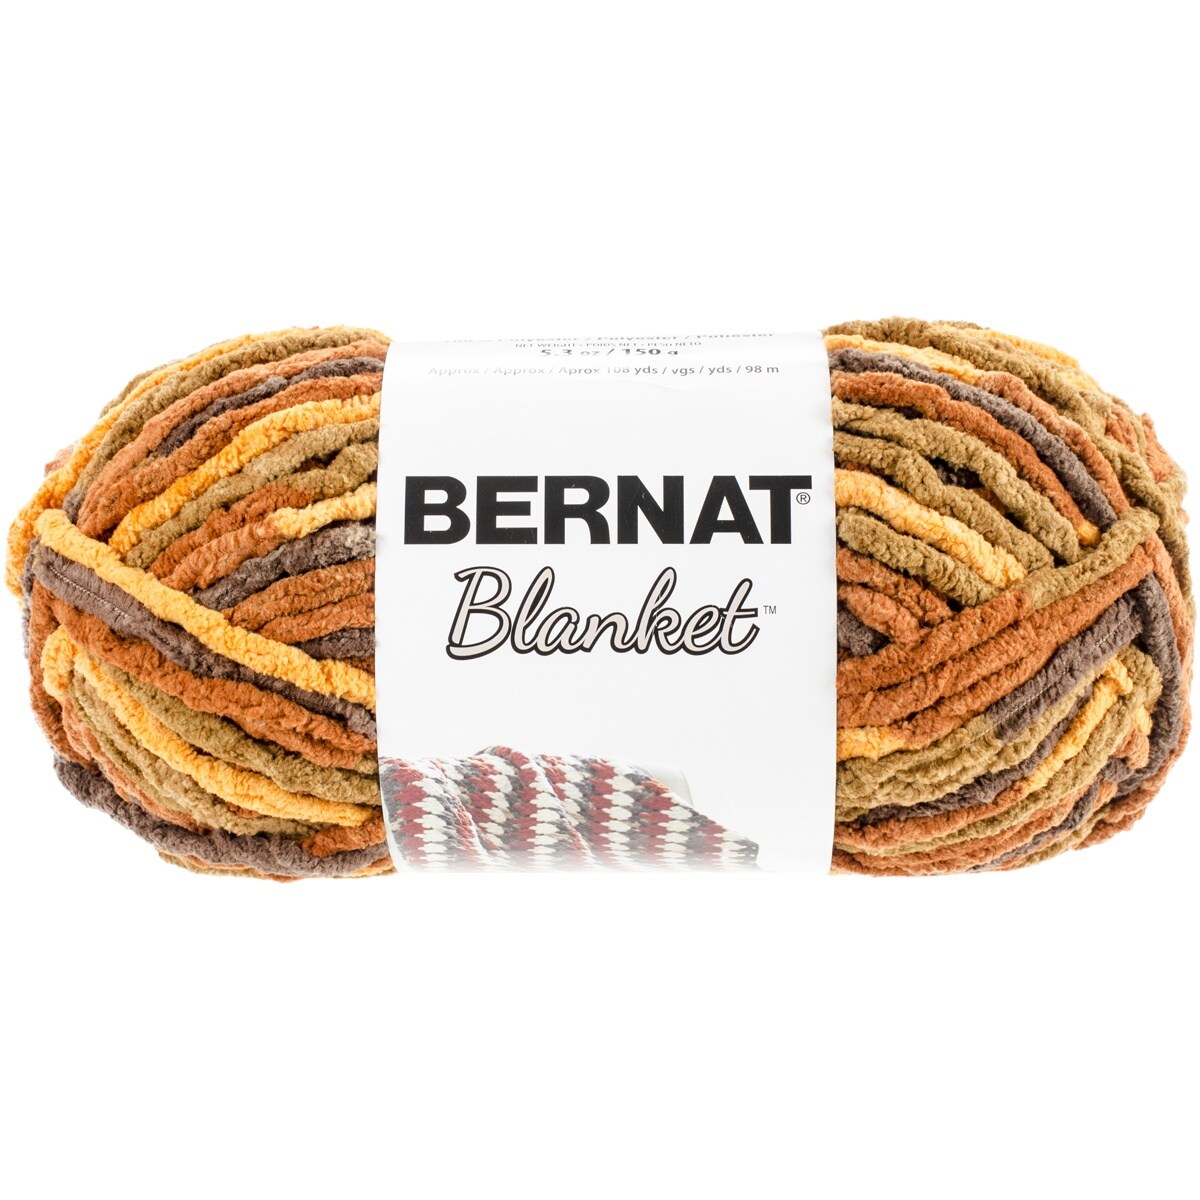 Multipack of 24 - Bernat Blanket Yarn-Fall Leaves